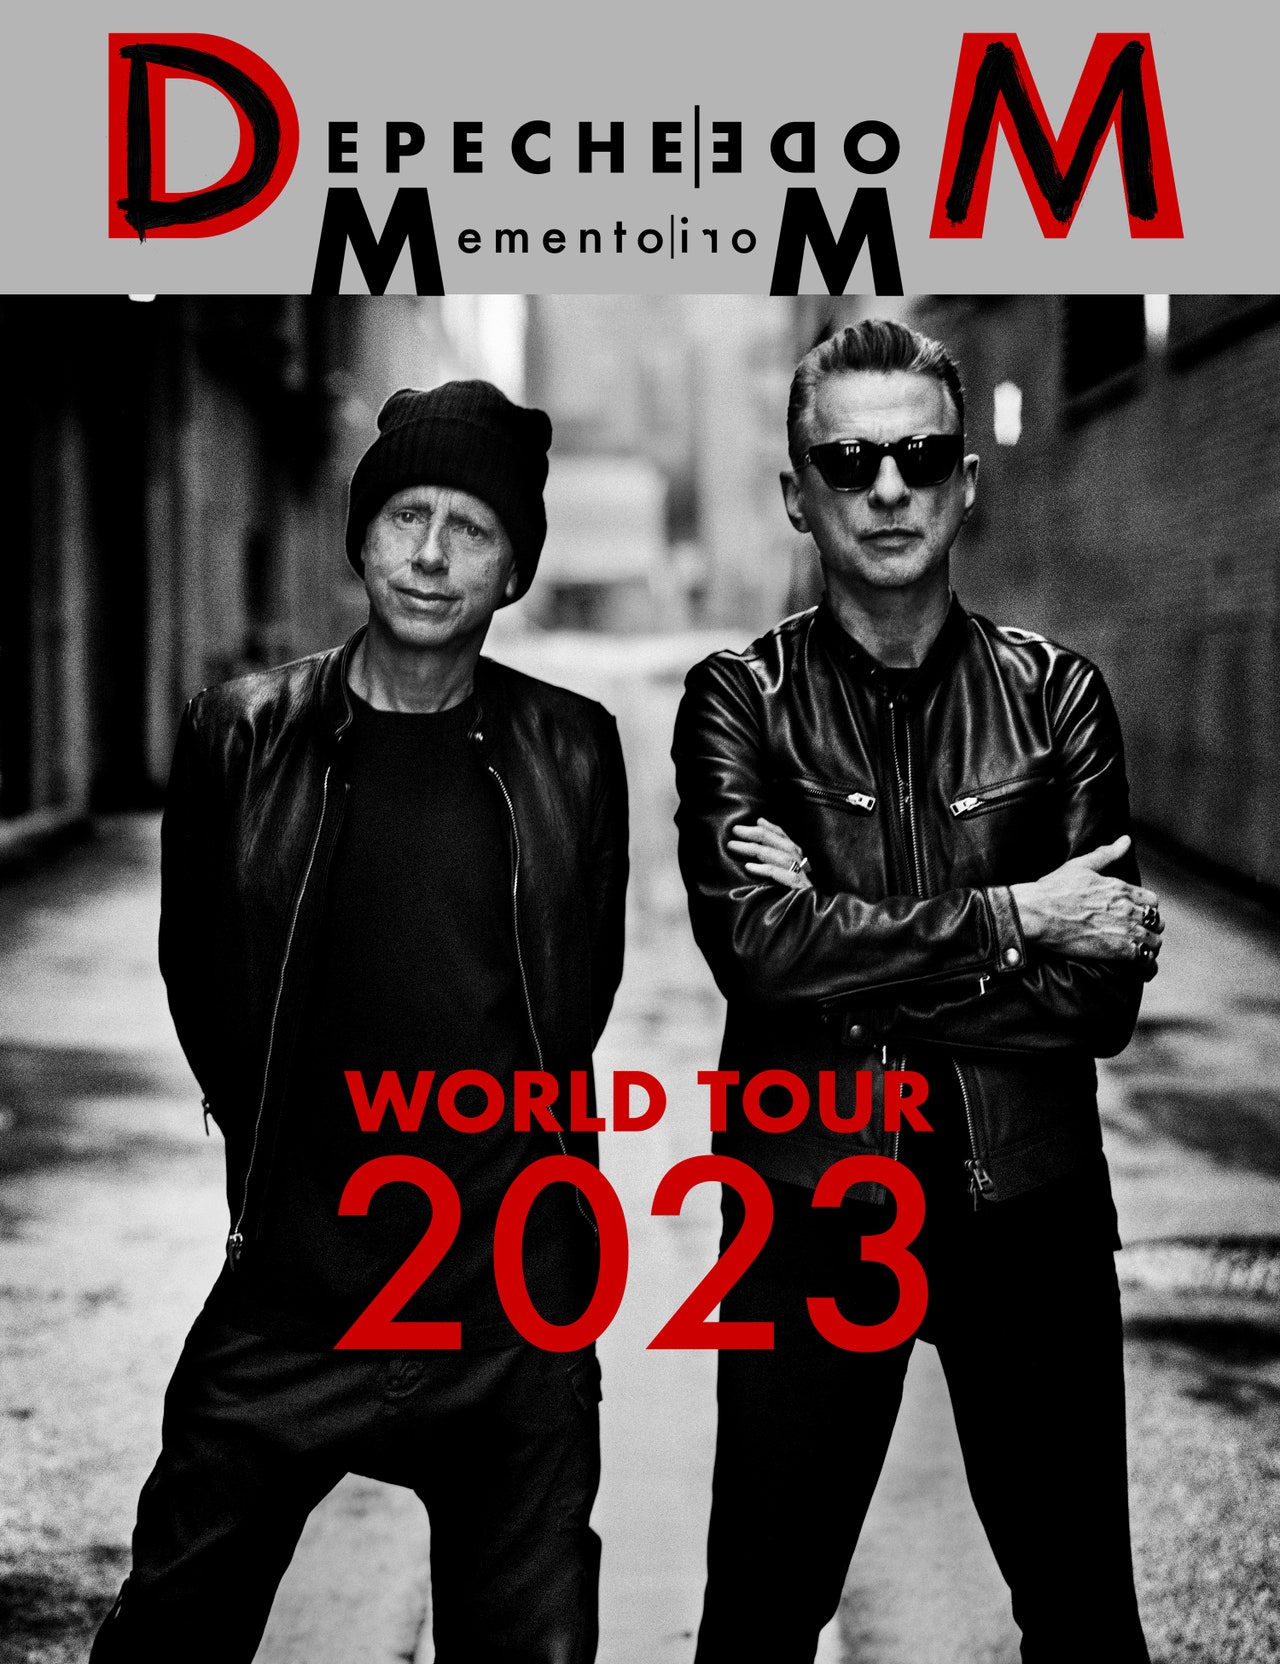 Depeche Mode: Memento Mori World Tour 2023